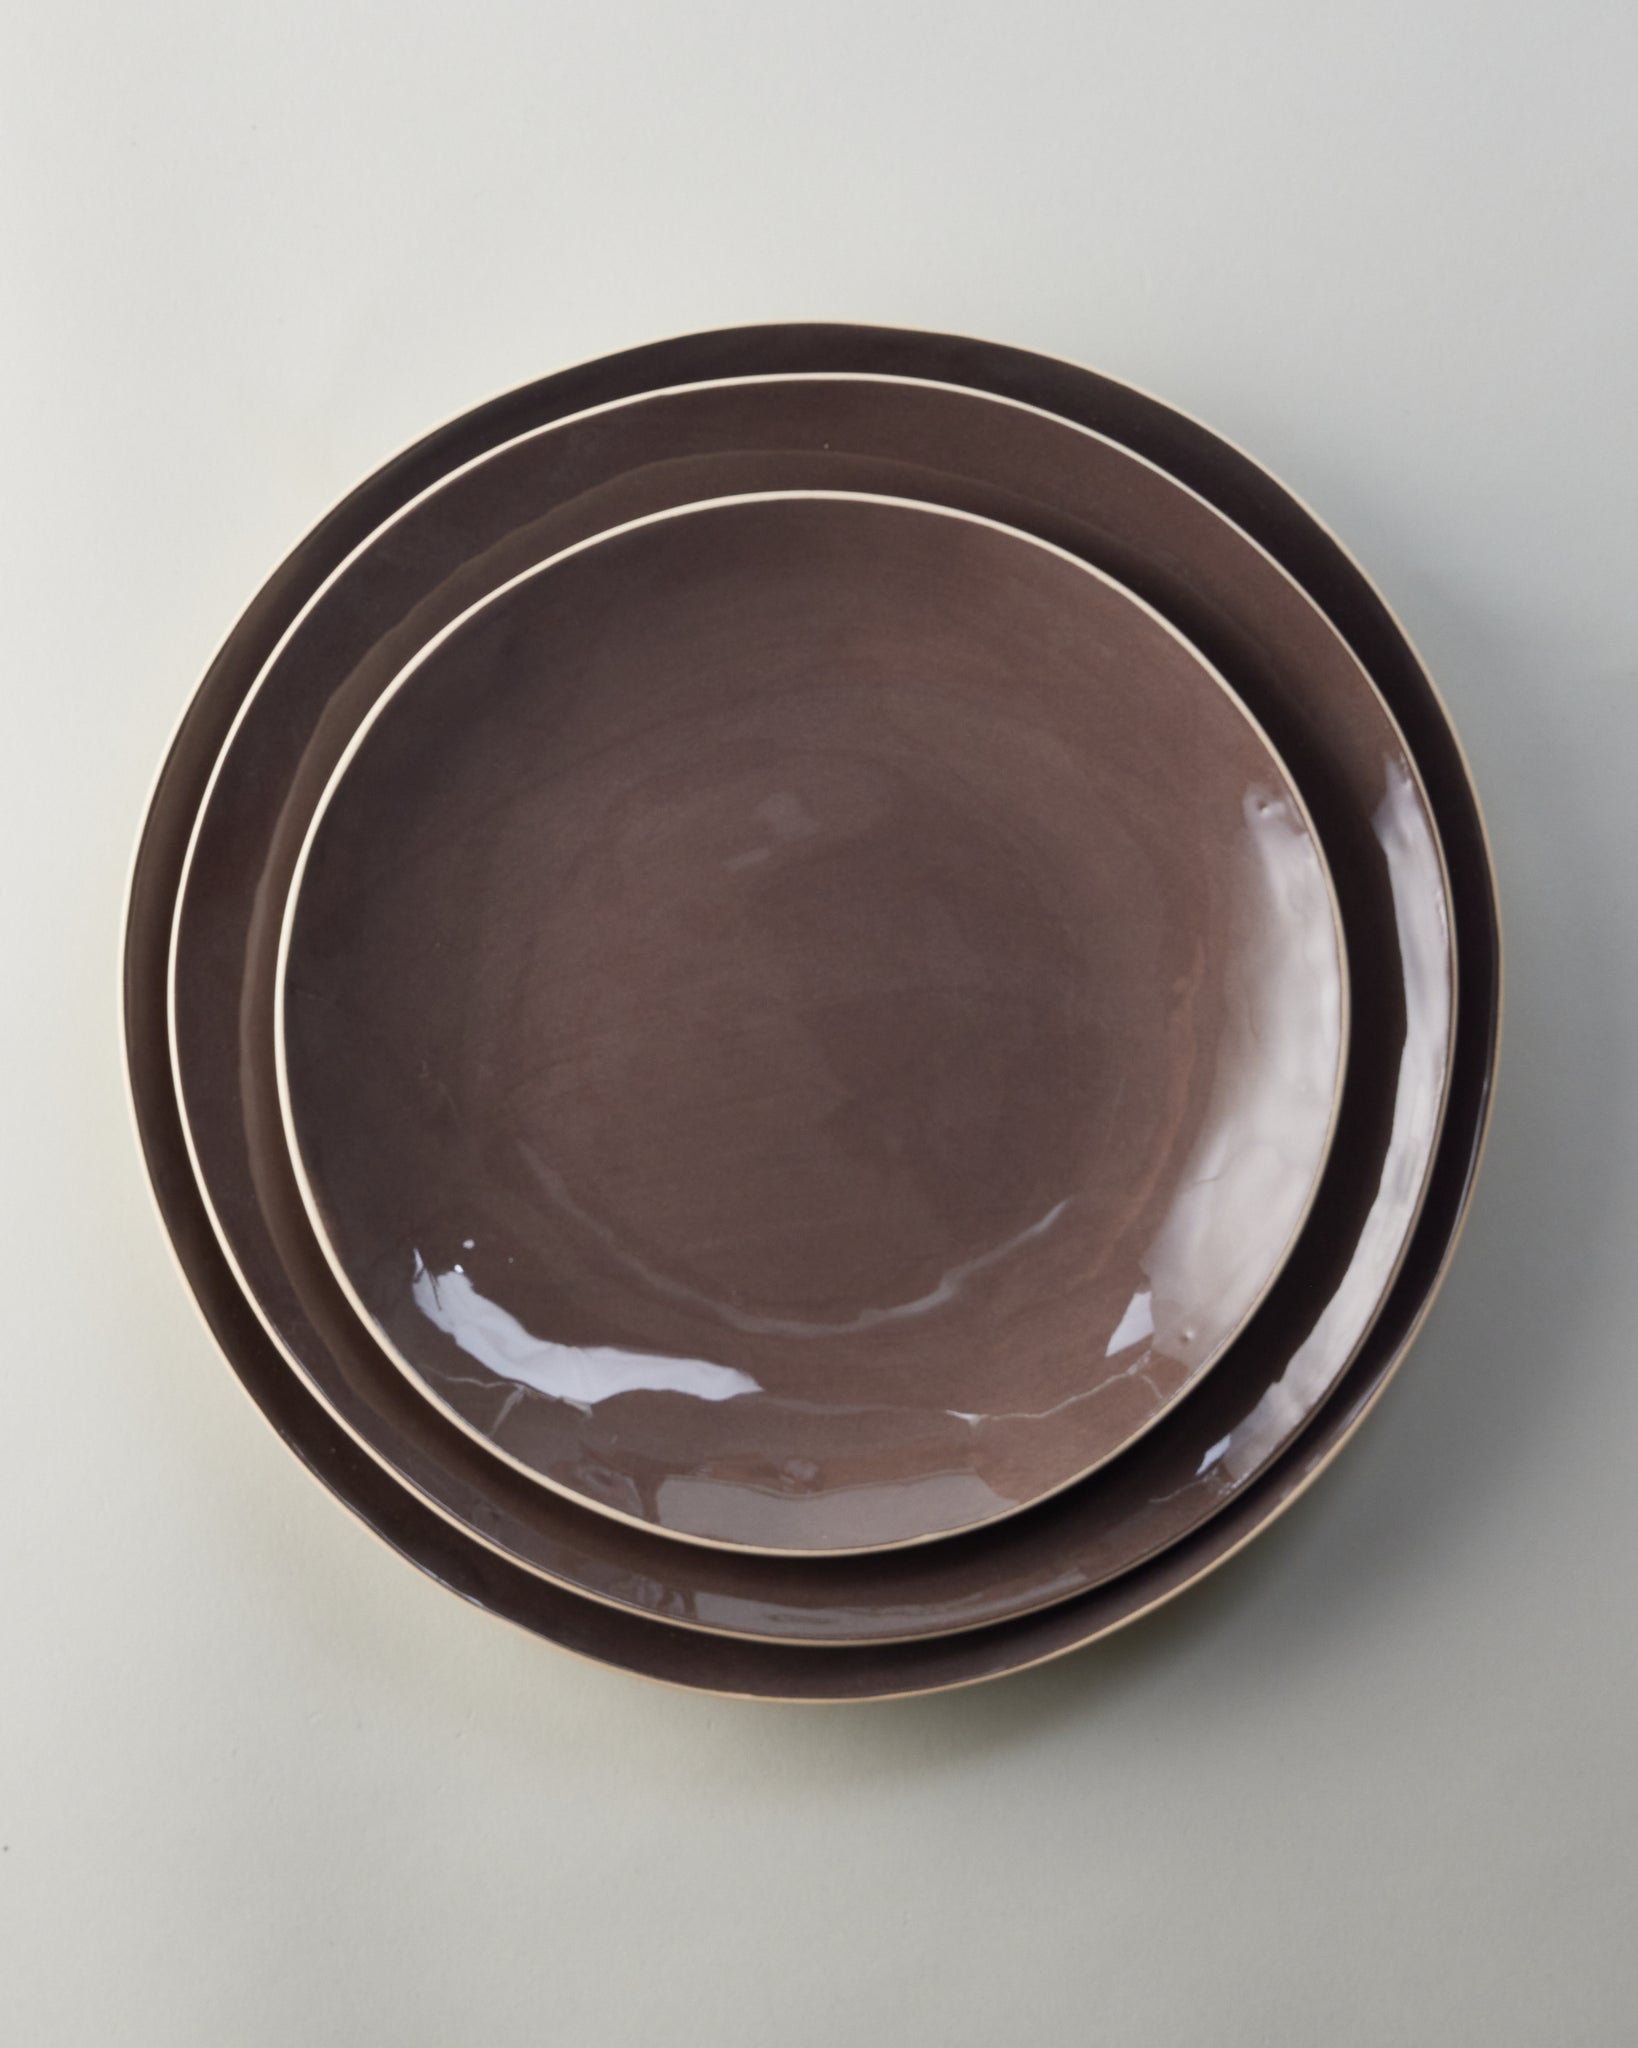 Medium Plate in Cocoa